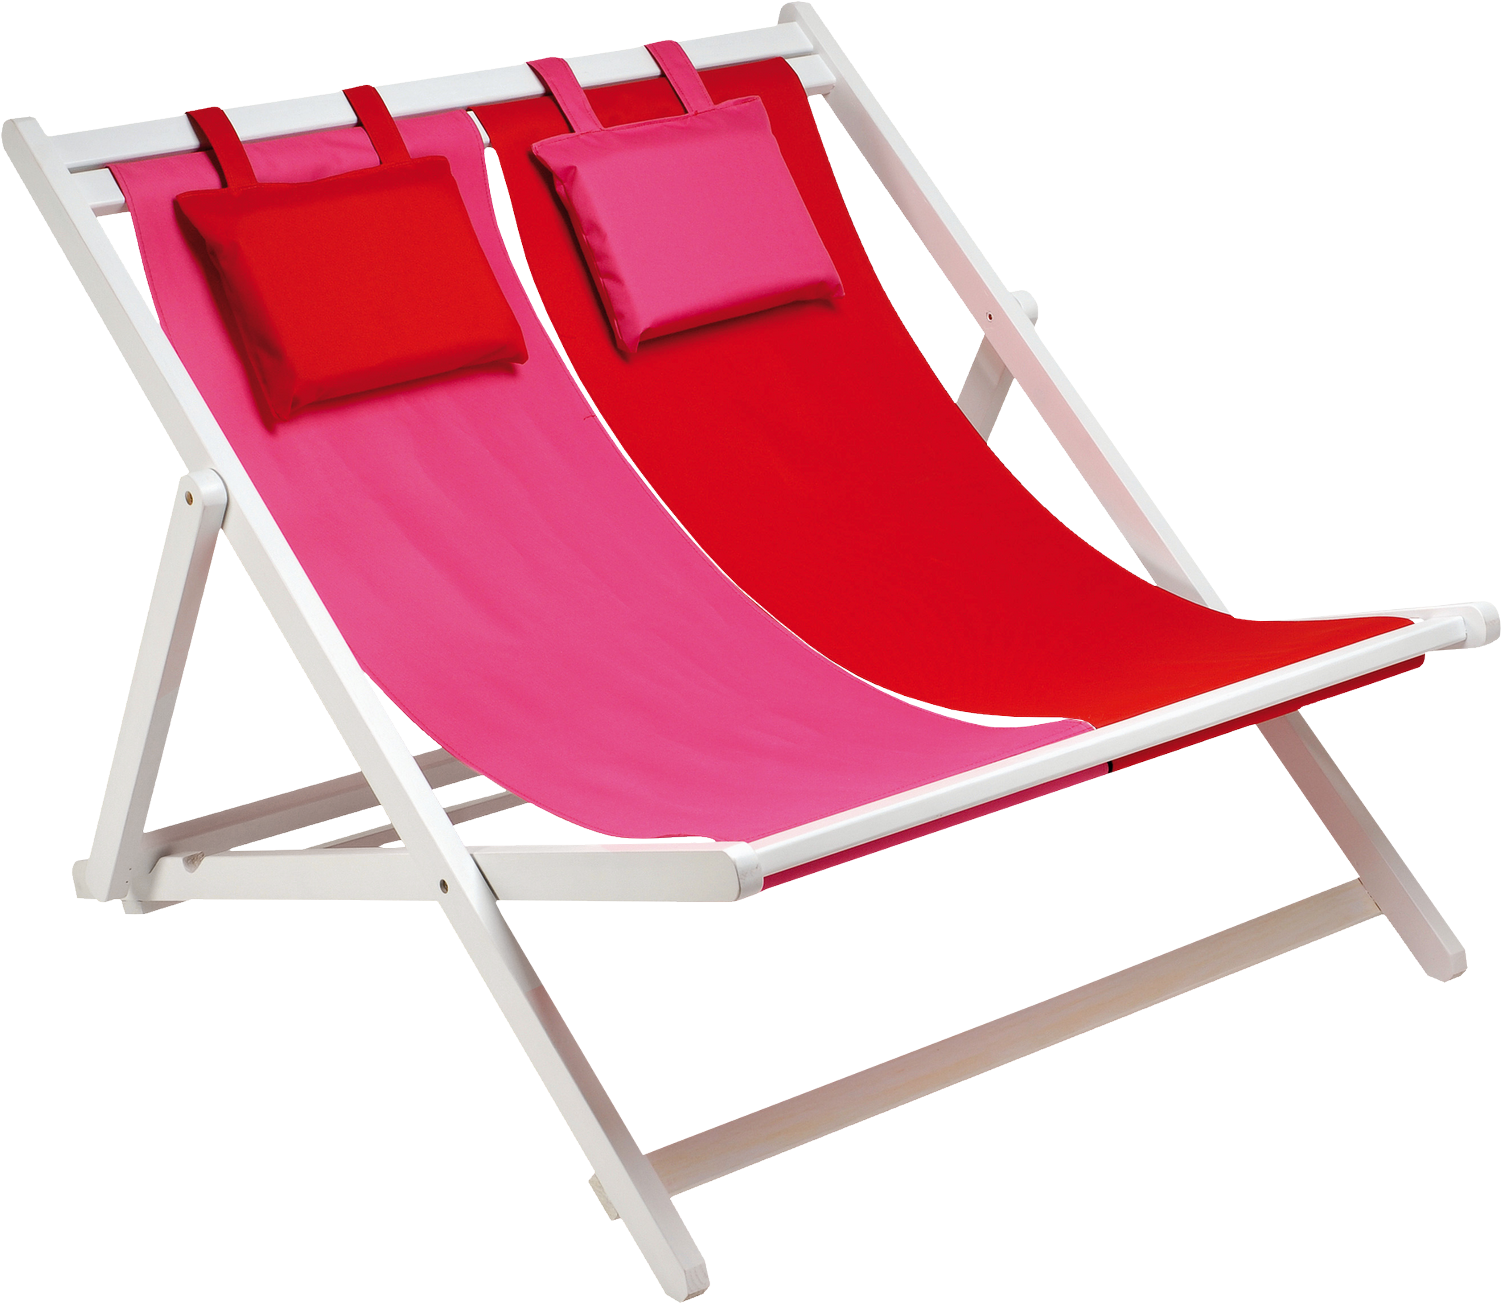 Lounge Chair - Lounge Chair Clip Art Transparent - Free Transparent PNG ...